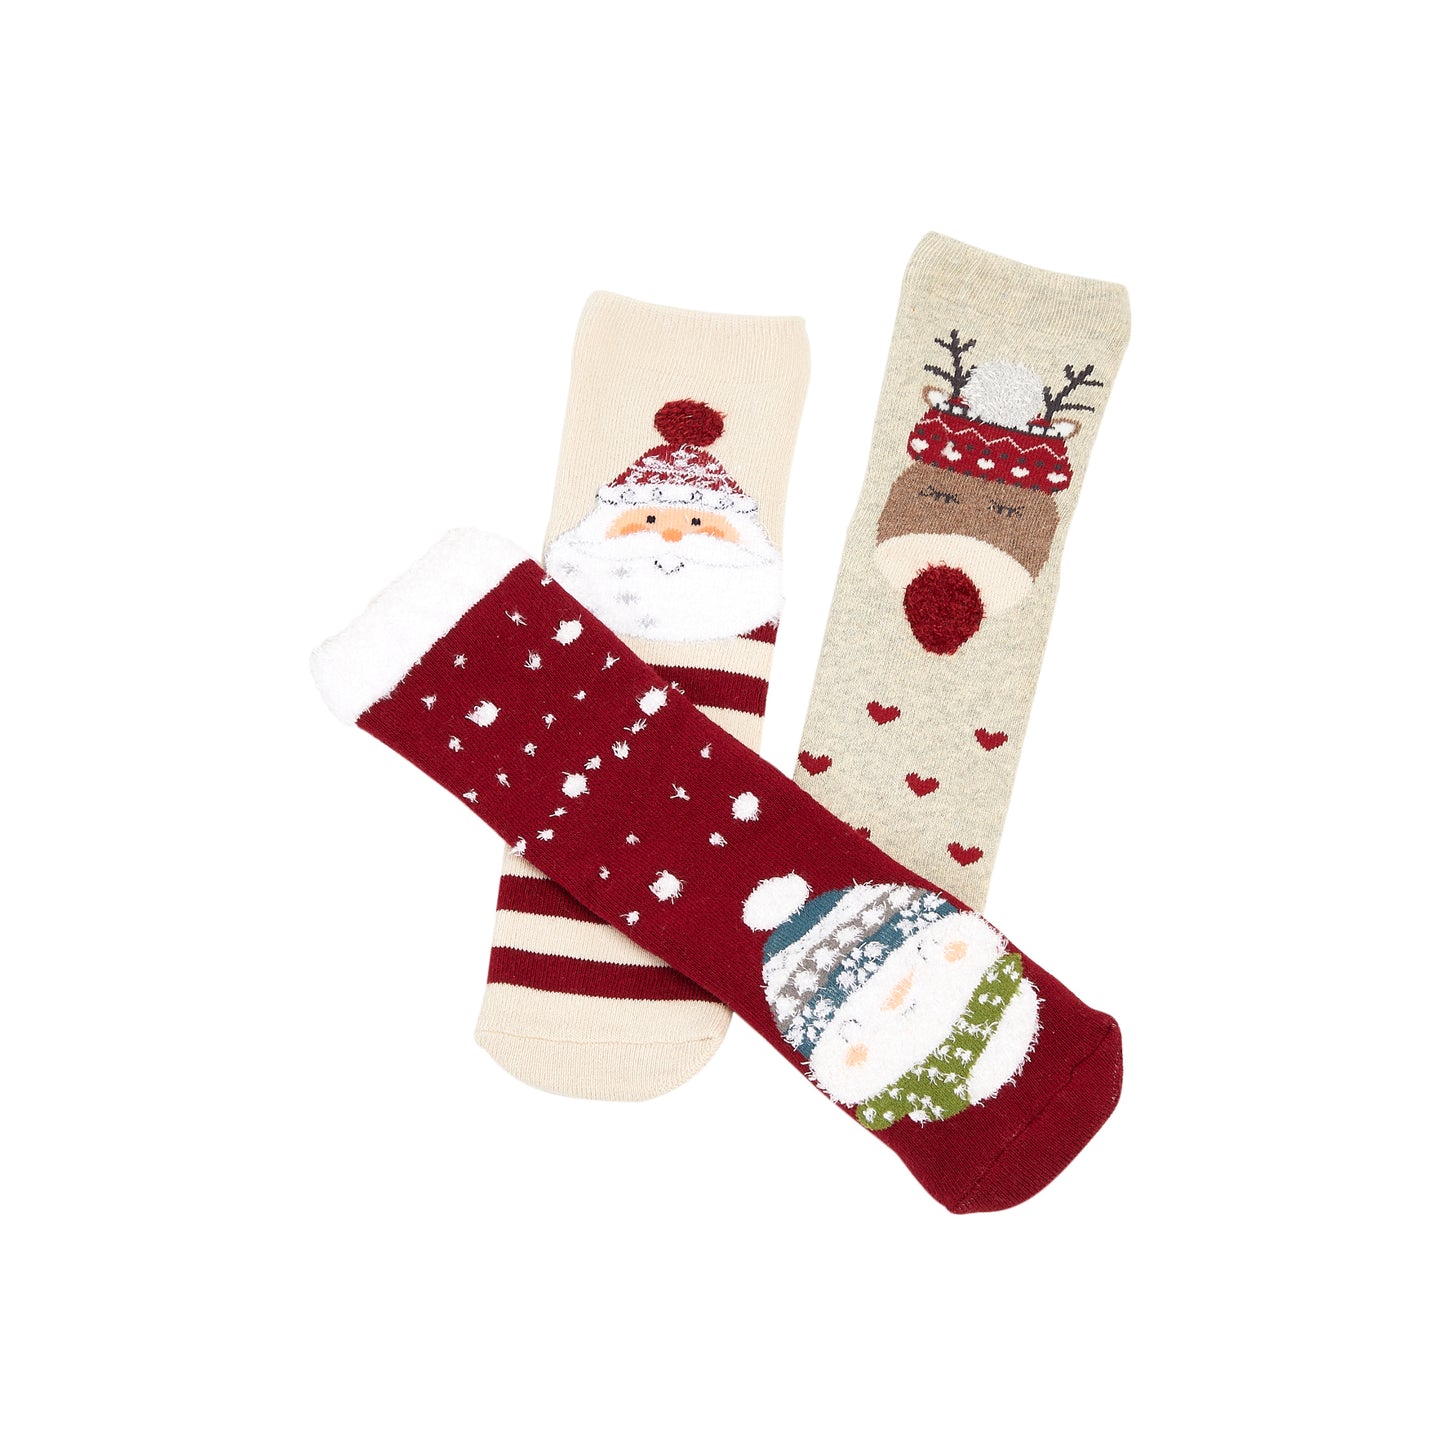 Tiny Alpaca 3-In-1 Box Set Printed Colourful Children's Christmas Socks - TS004-1246 - IDENTITY Apparel Shop